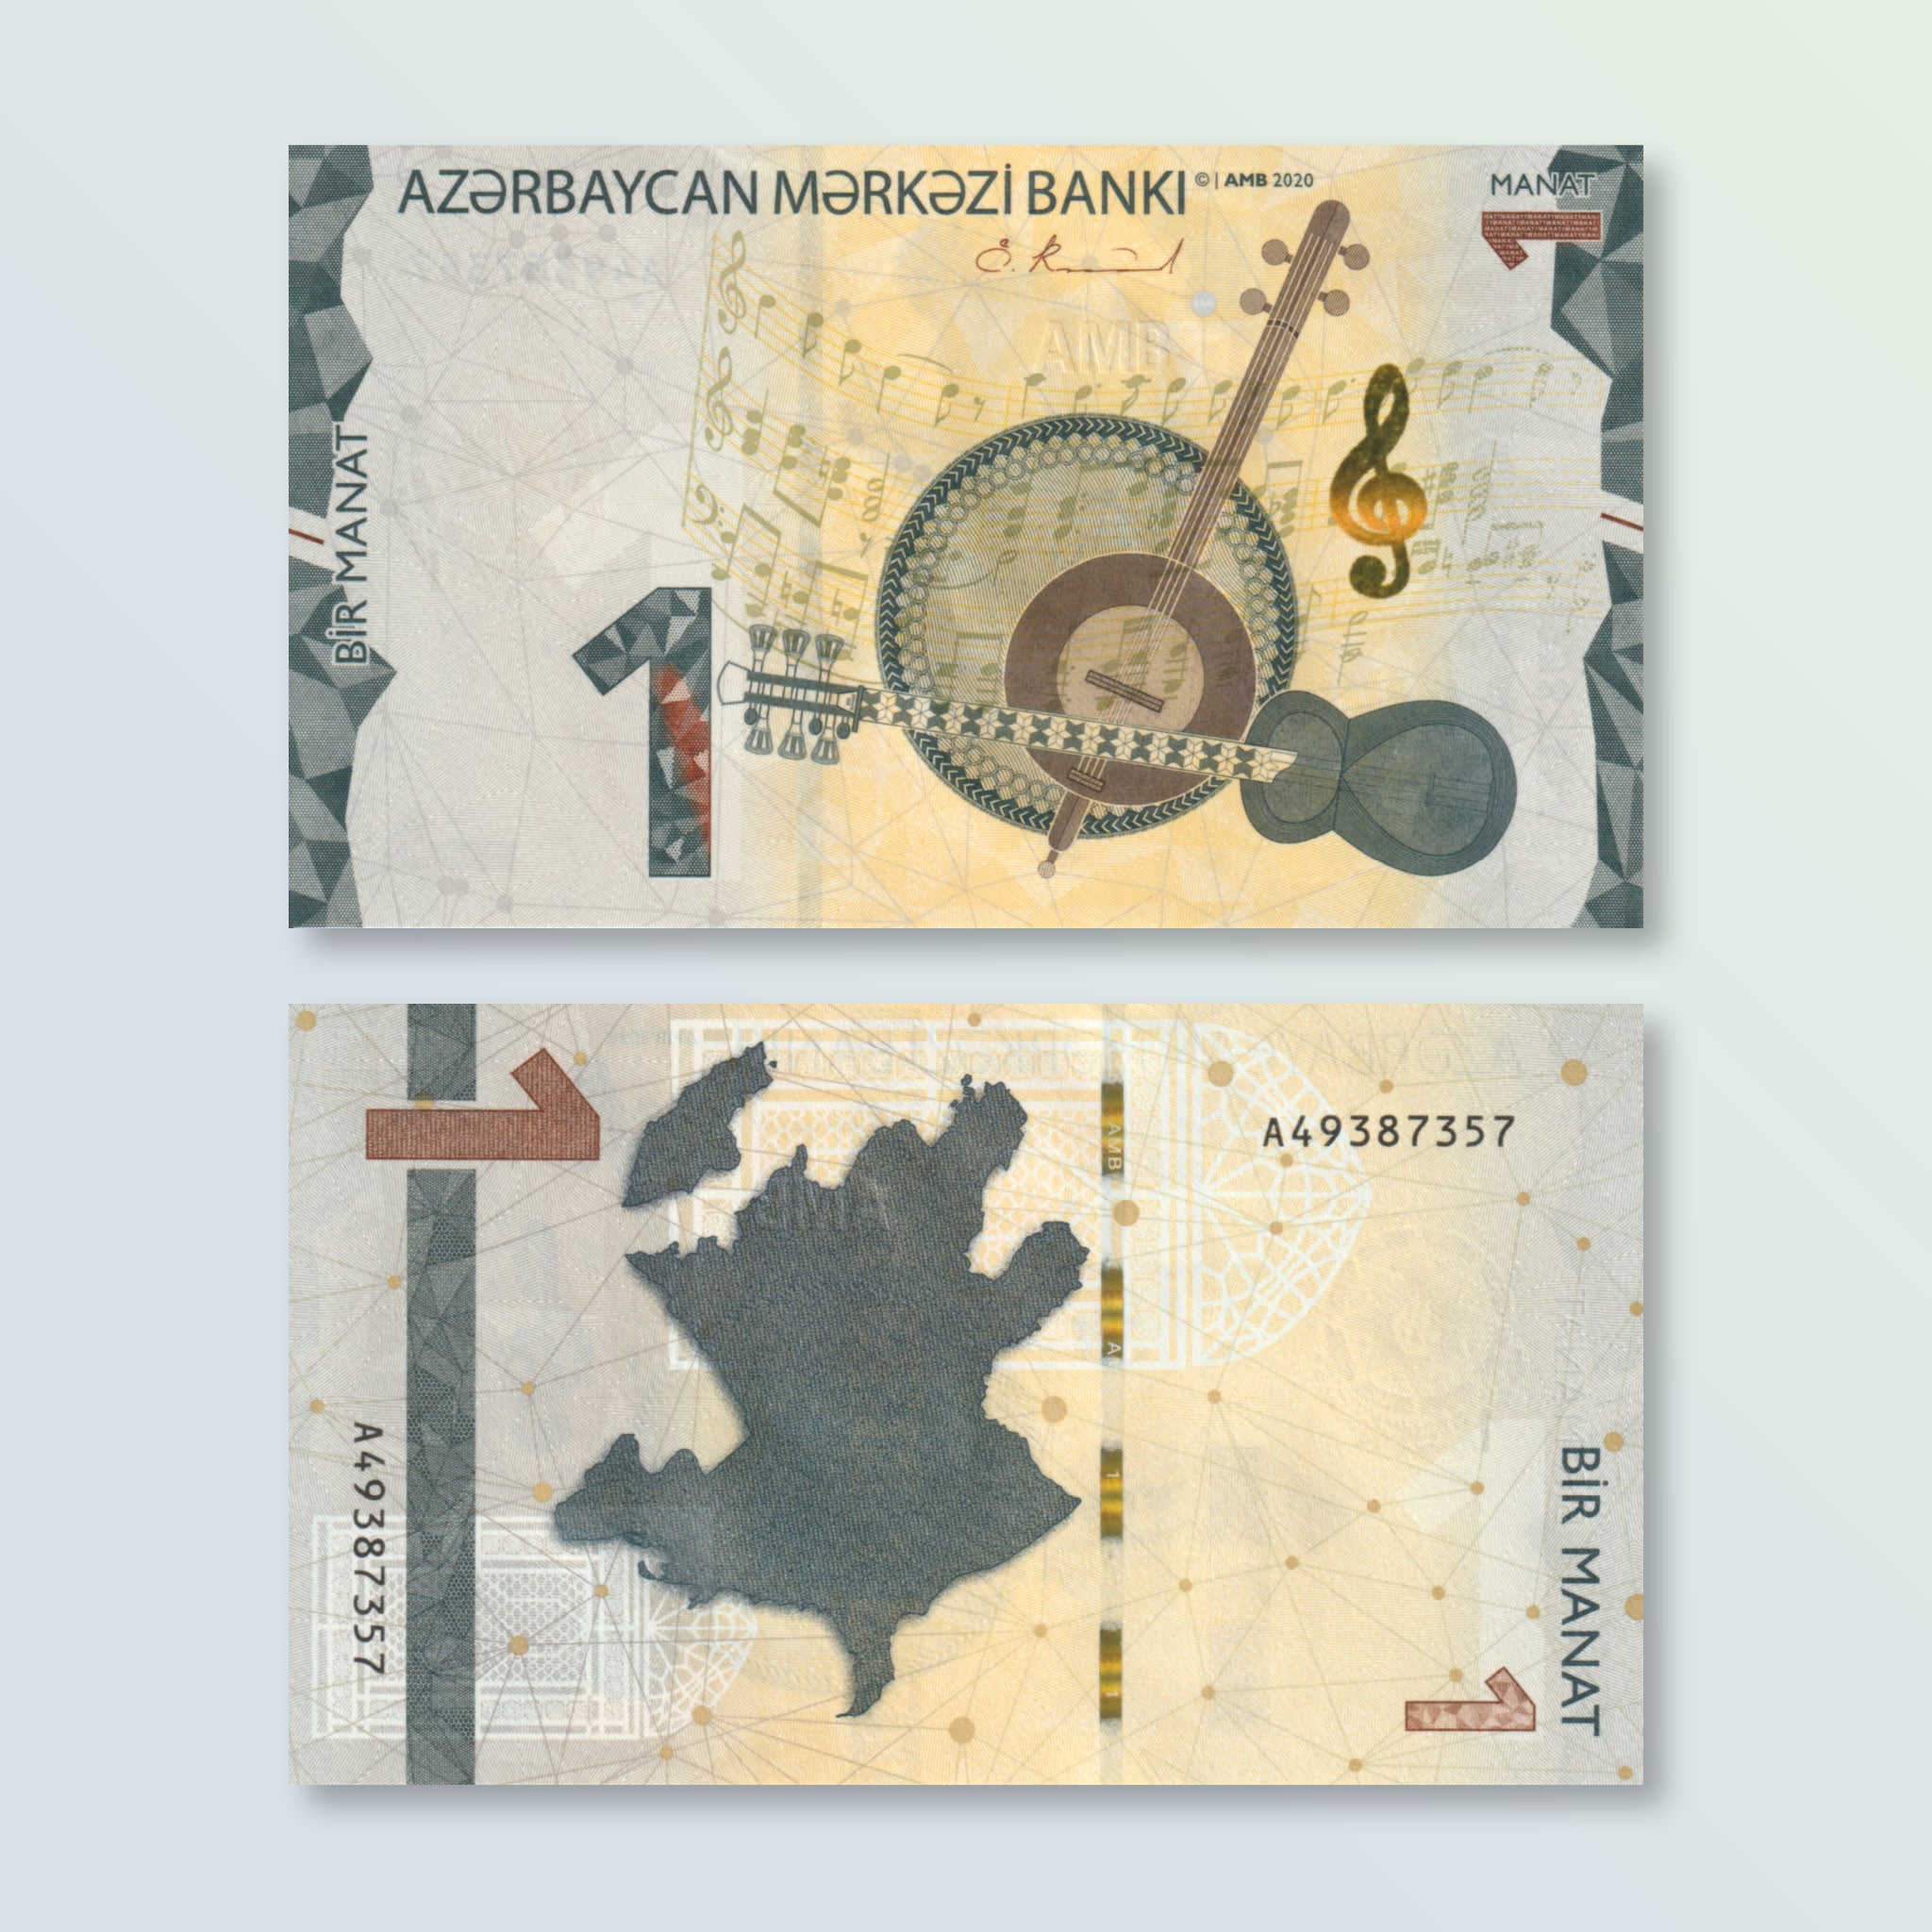 Azerbaijan 1 Manat, 2020, B408a, UNC - Robert's World Money - World Banknotes